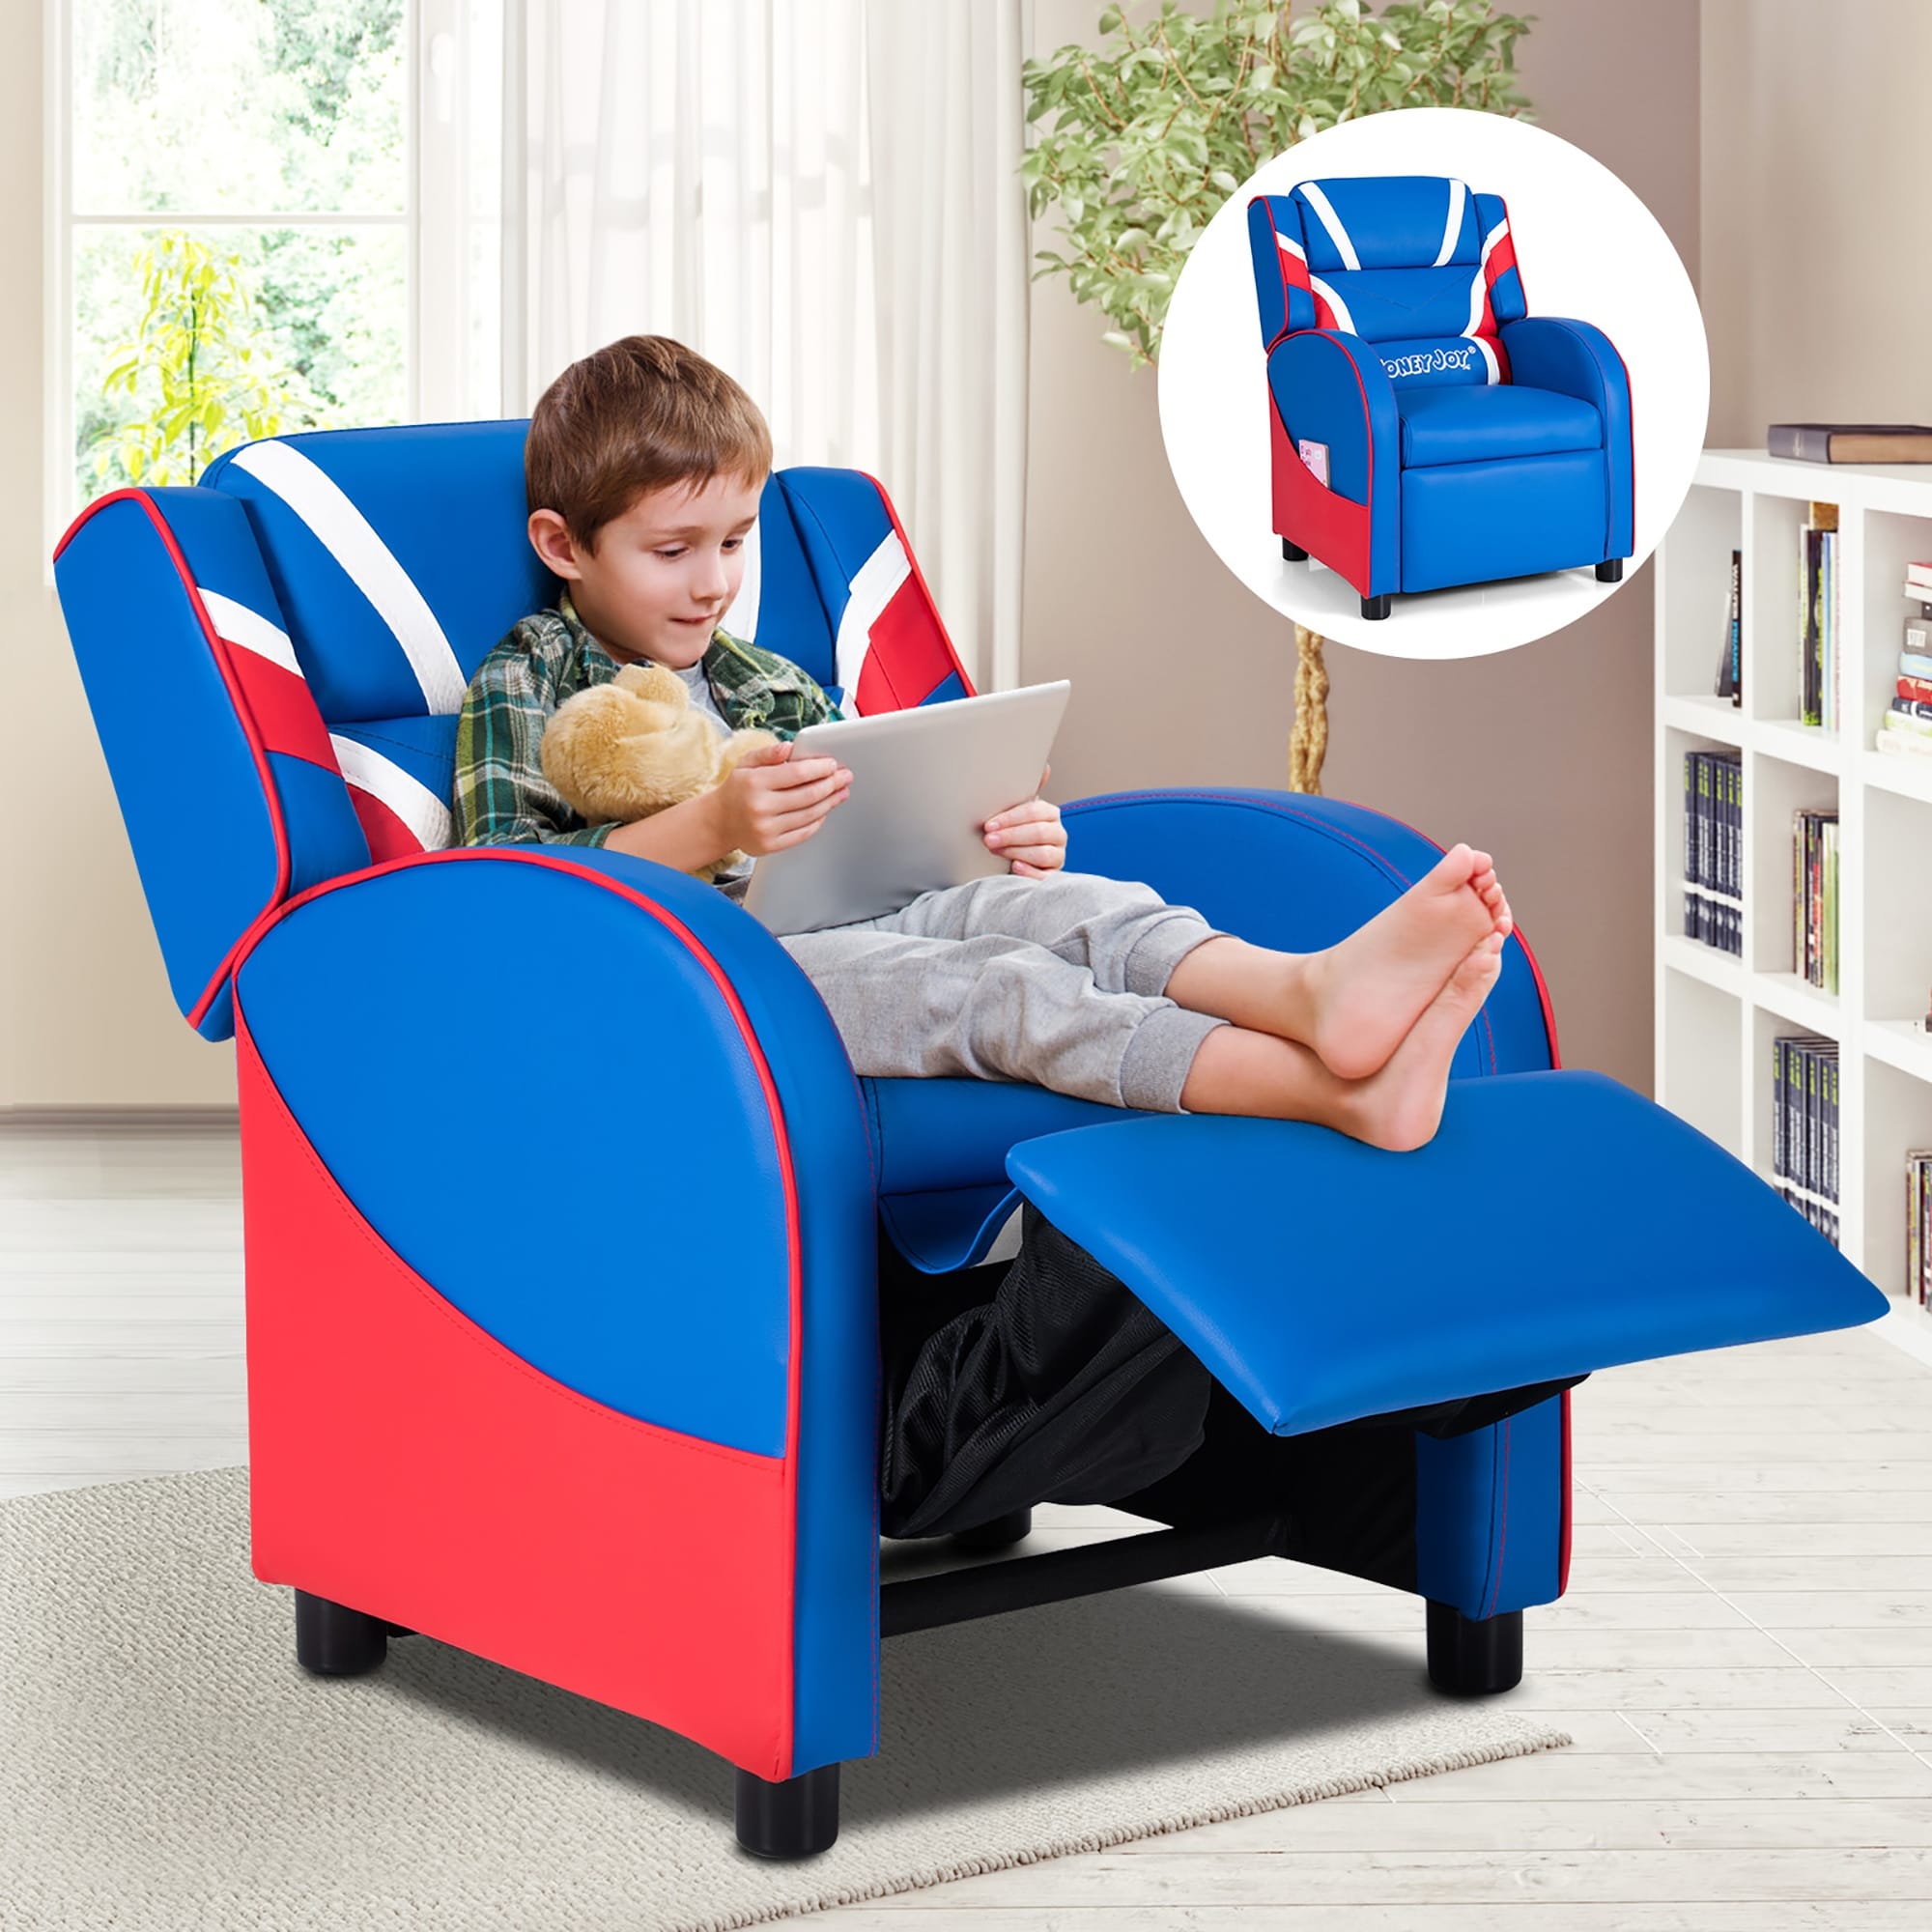 HONEY JOY Blue PU Leather Gaming Recliner Chair Single Massage